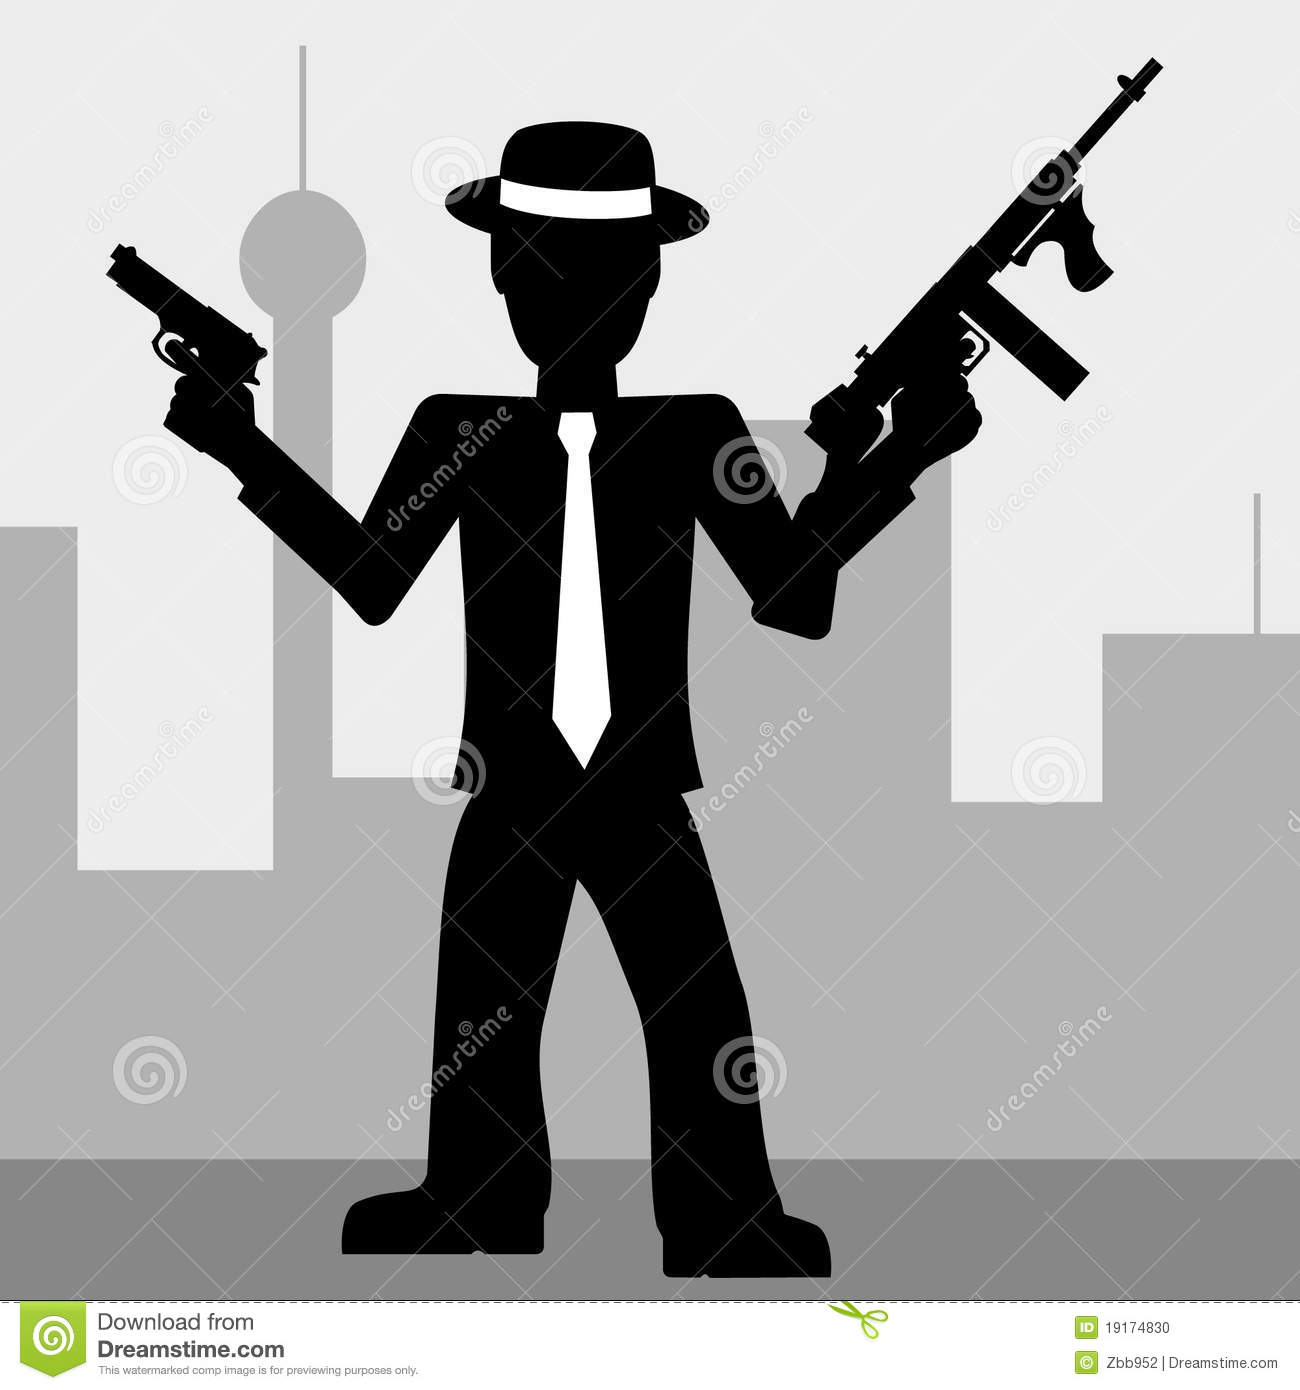 More Similar Stock Images Of   Mafia Man With Guns